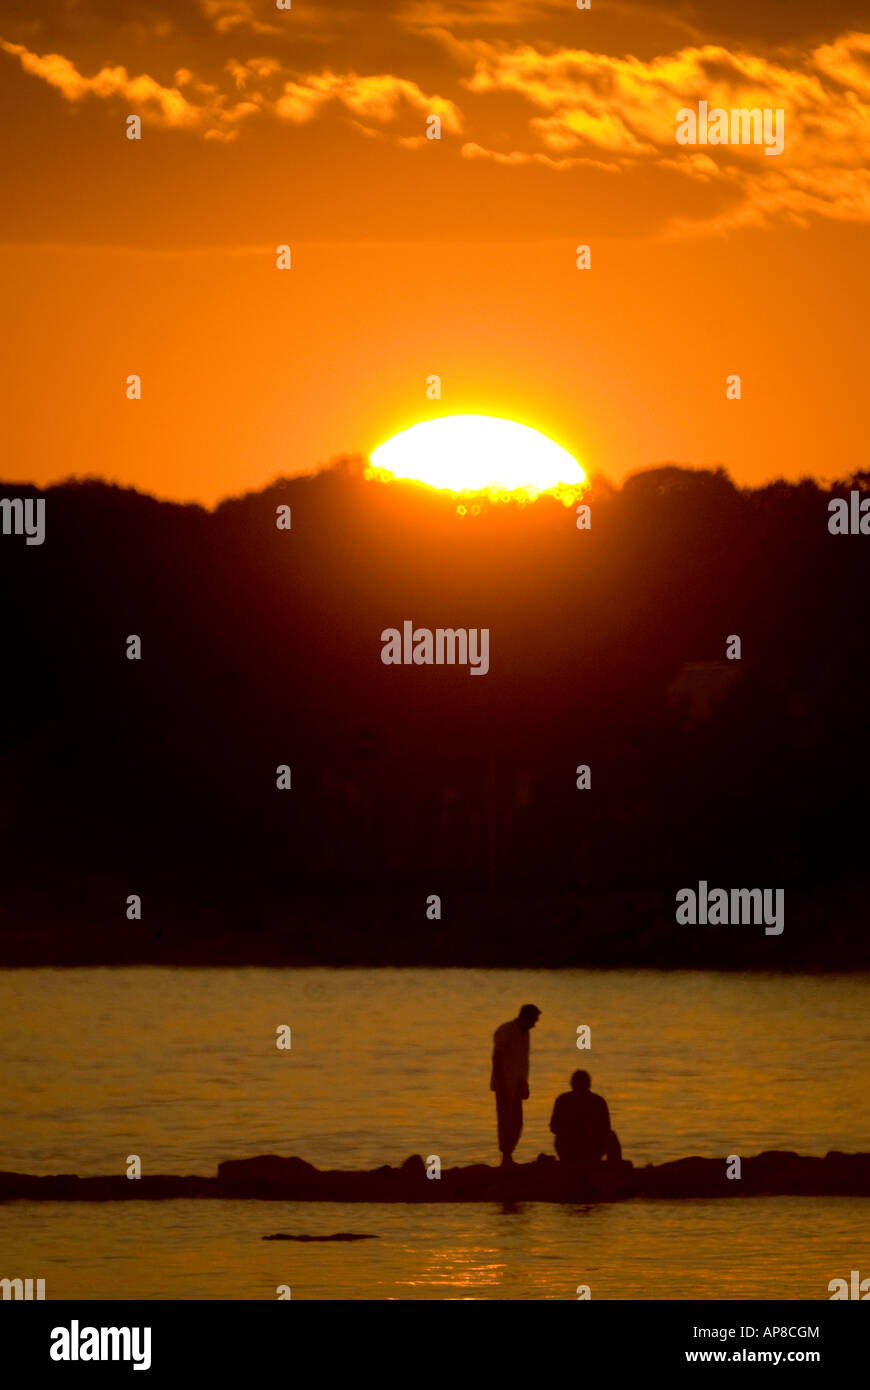 Sunset with 2 figures on sandbar, Compo Beach, Westport, Ct, USA. Stock Photo